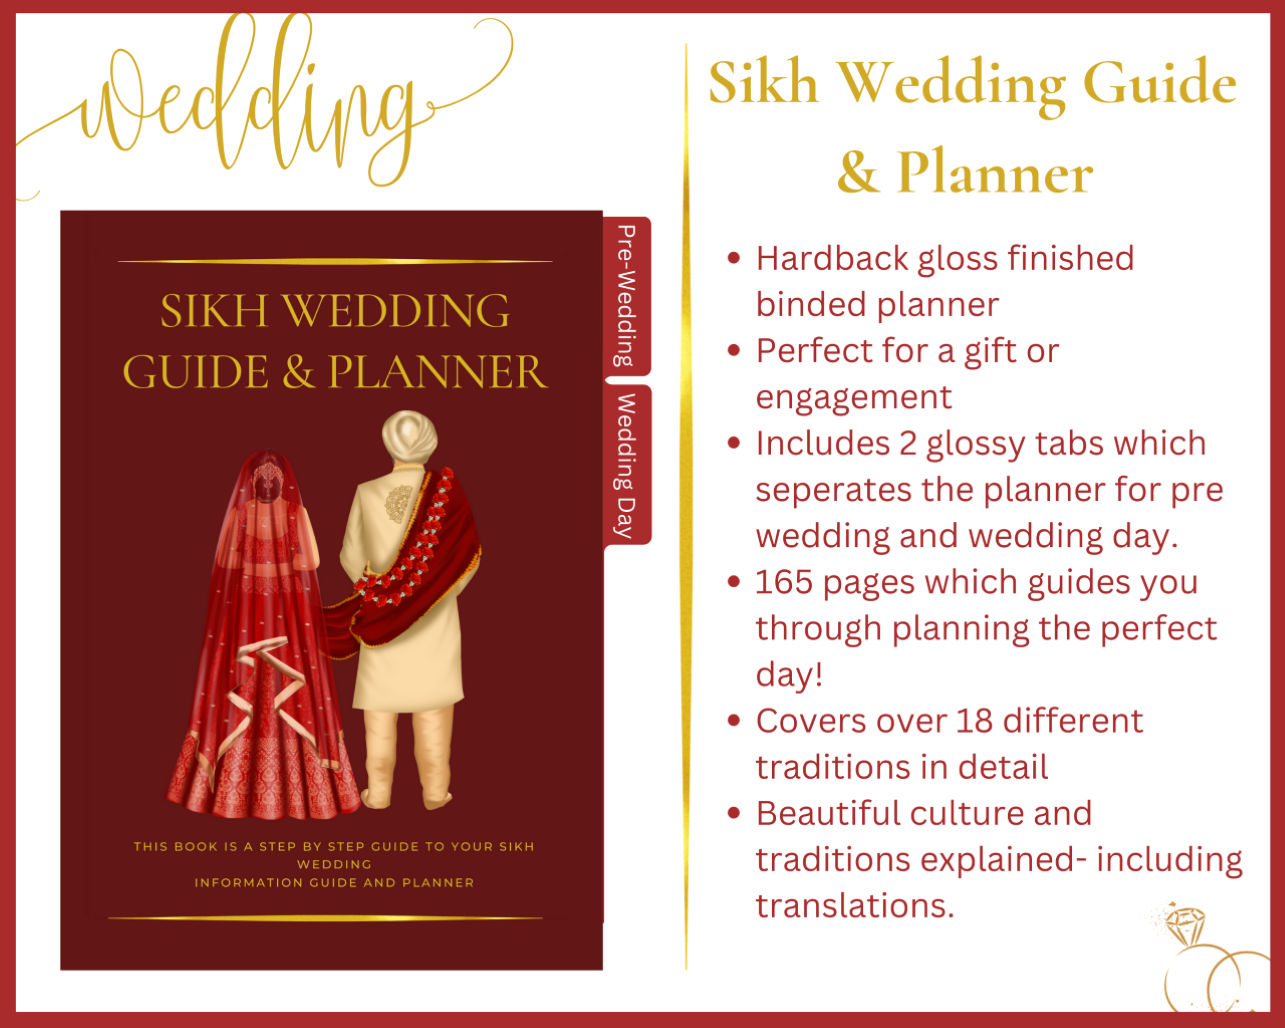 Sikh Wedding Guide & Planner- Red